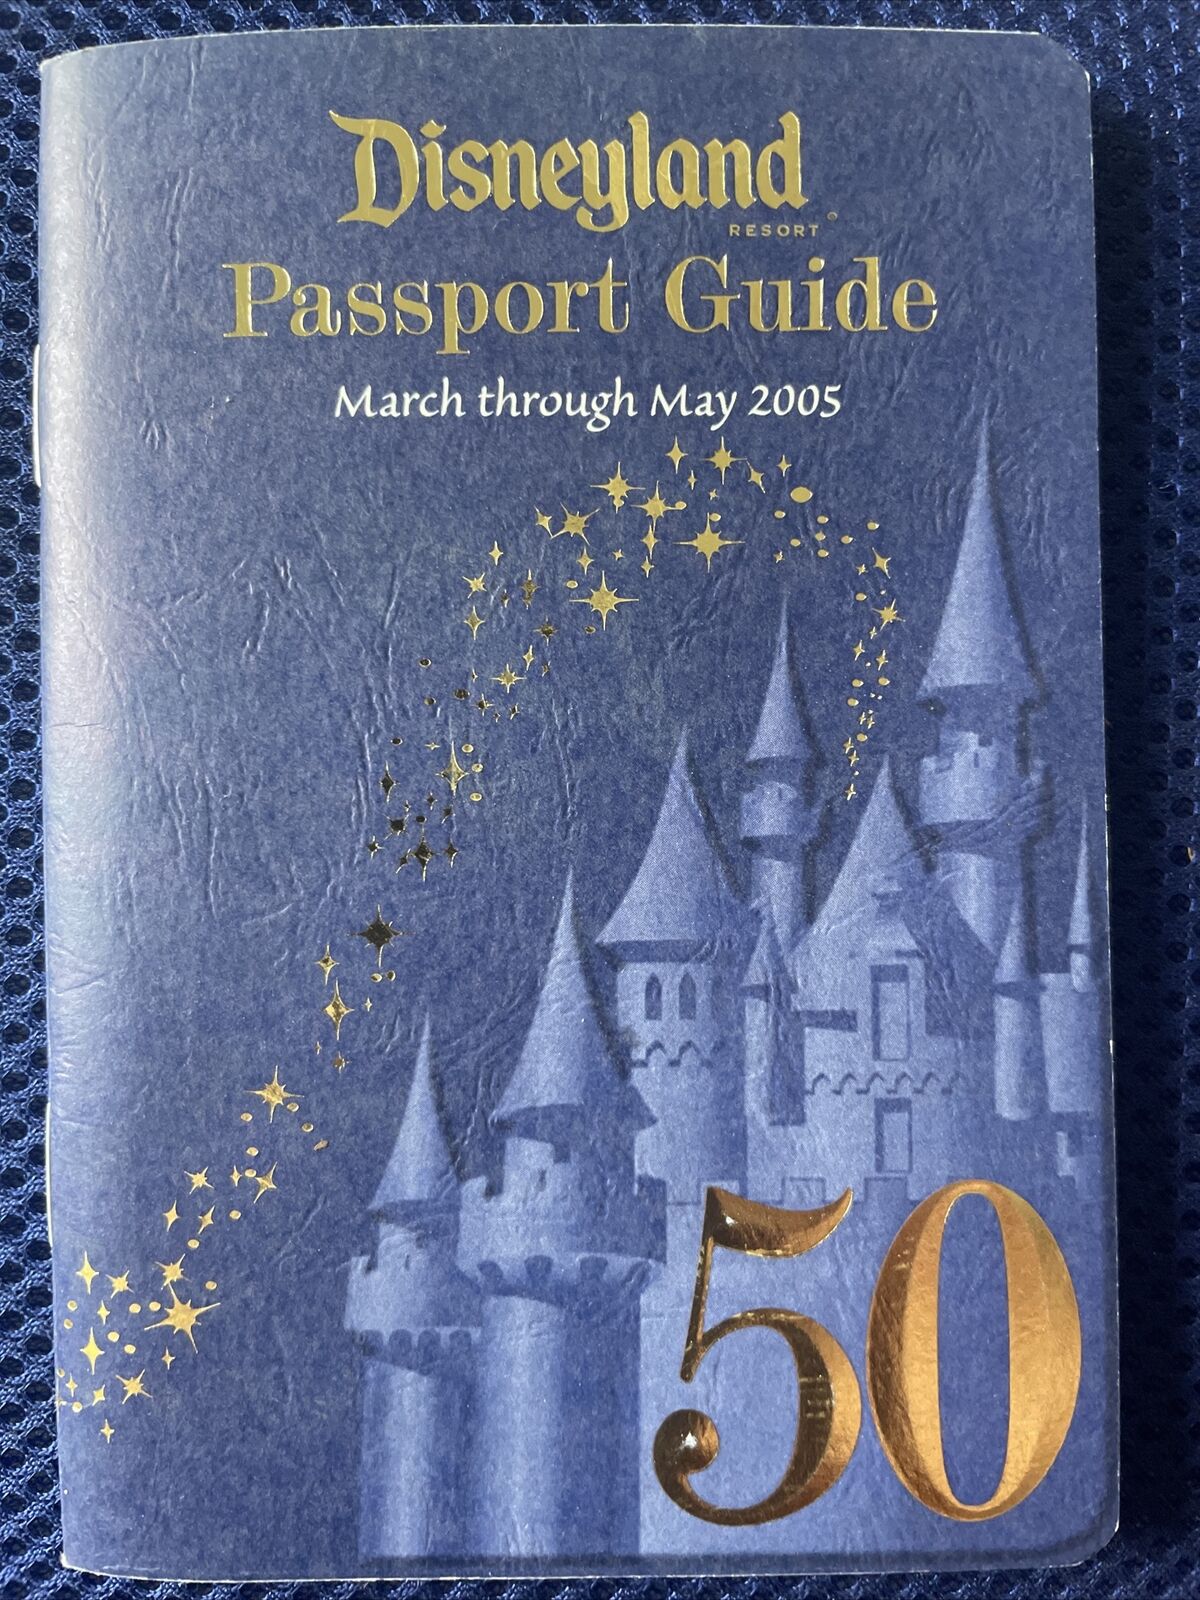 Disneyland Annual Passholder 50th Anniversary Passport Guide 2005 - March - May